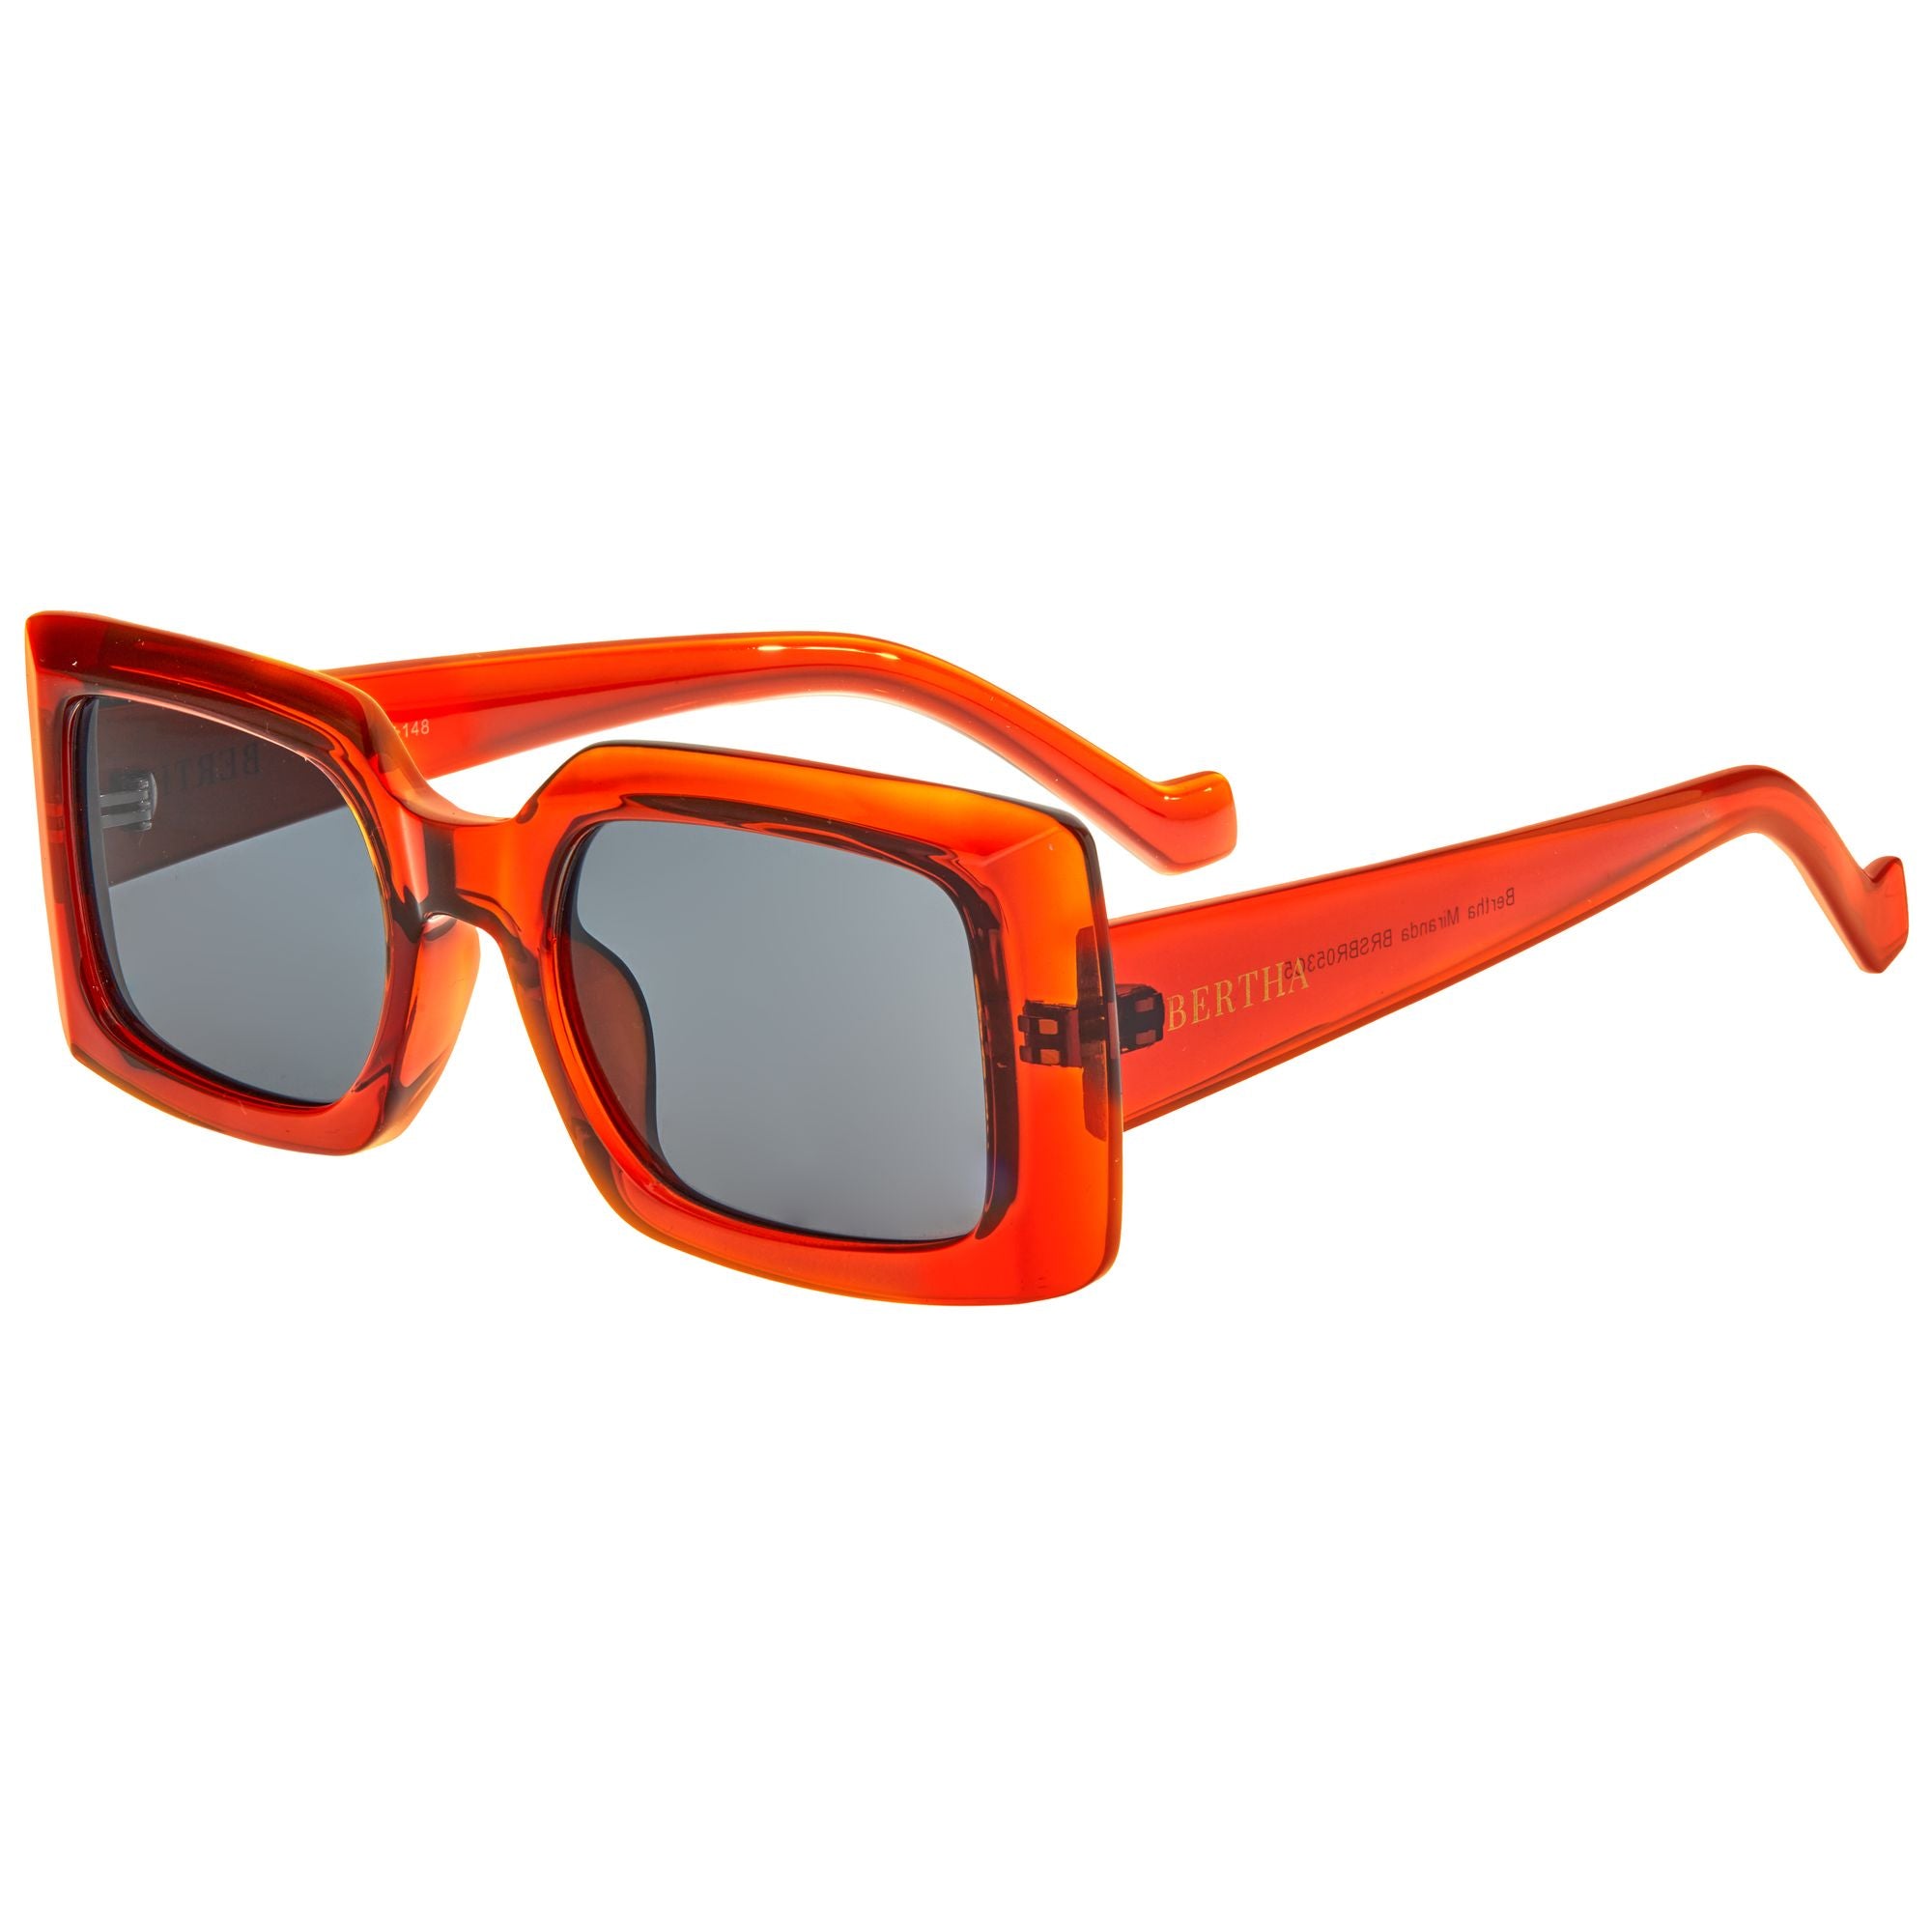 Bertha Miranda Polarized Sunglasses - Orange/Black - BRSBR053C5